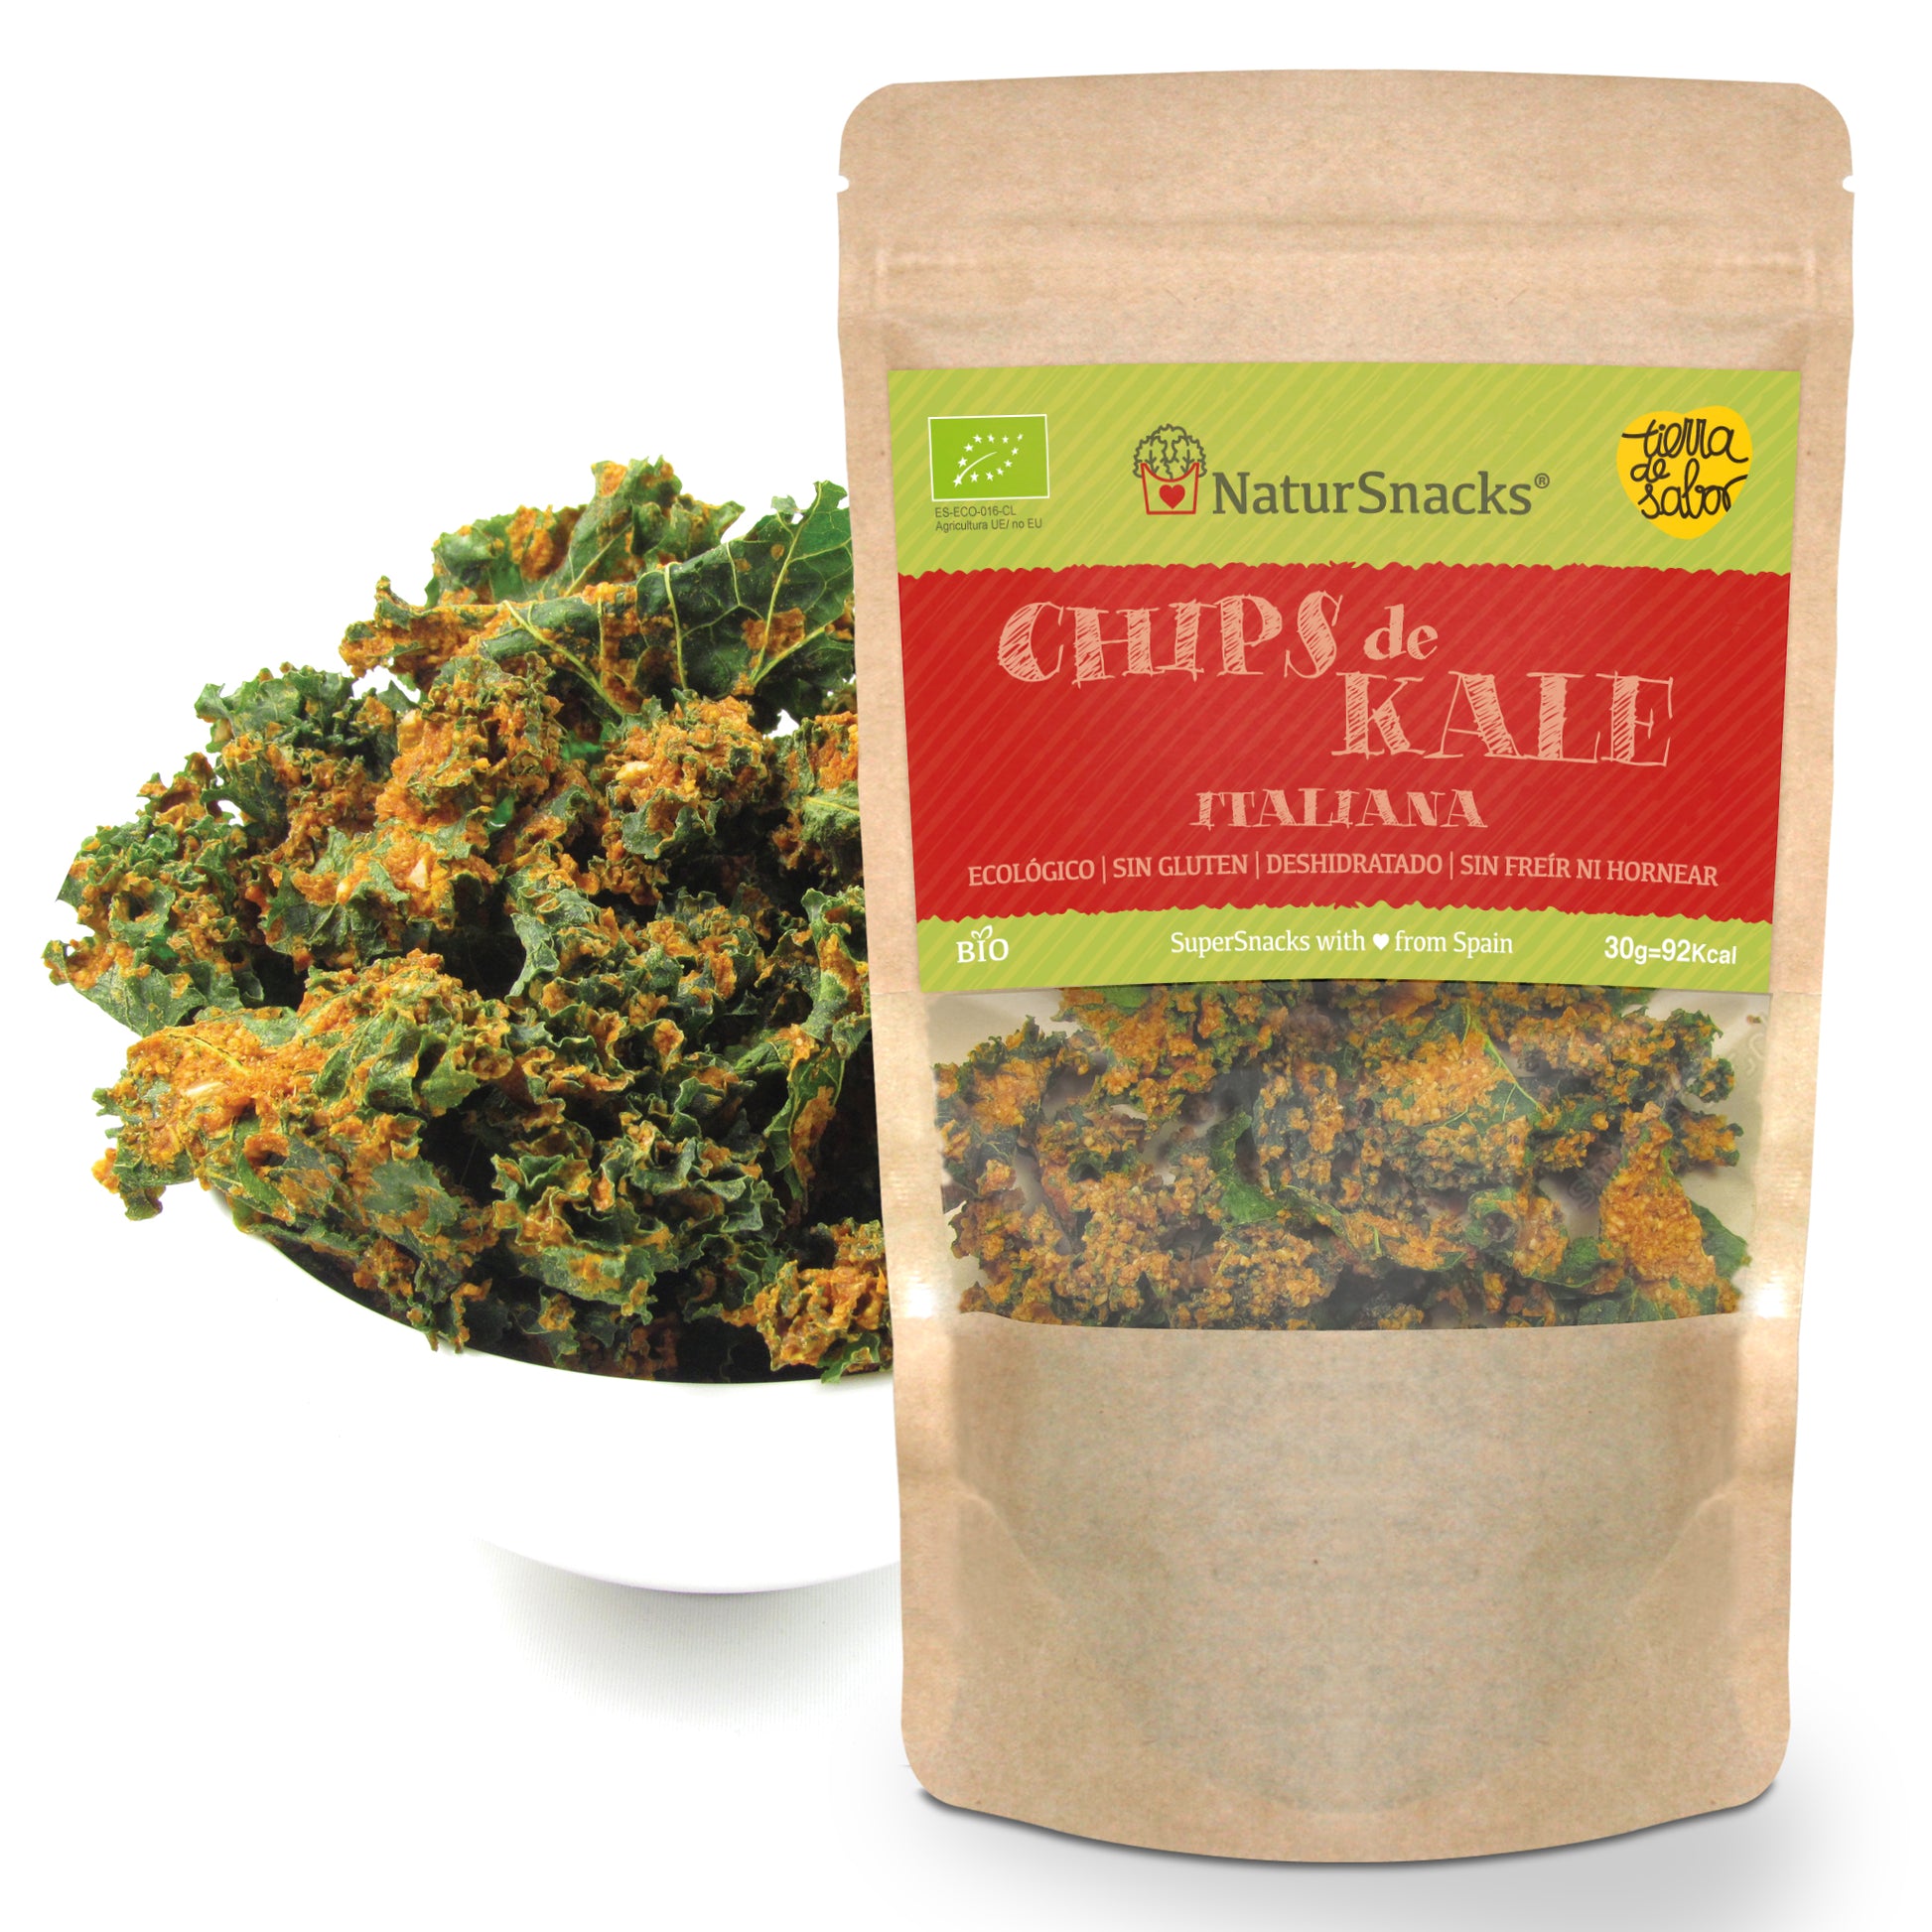 Chips de Kale ecológica a la italiana - NaturSnaks. Kale 100% natural sin cosas raras